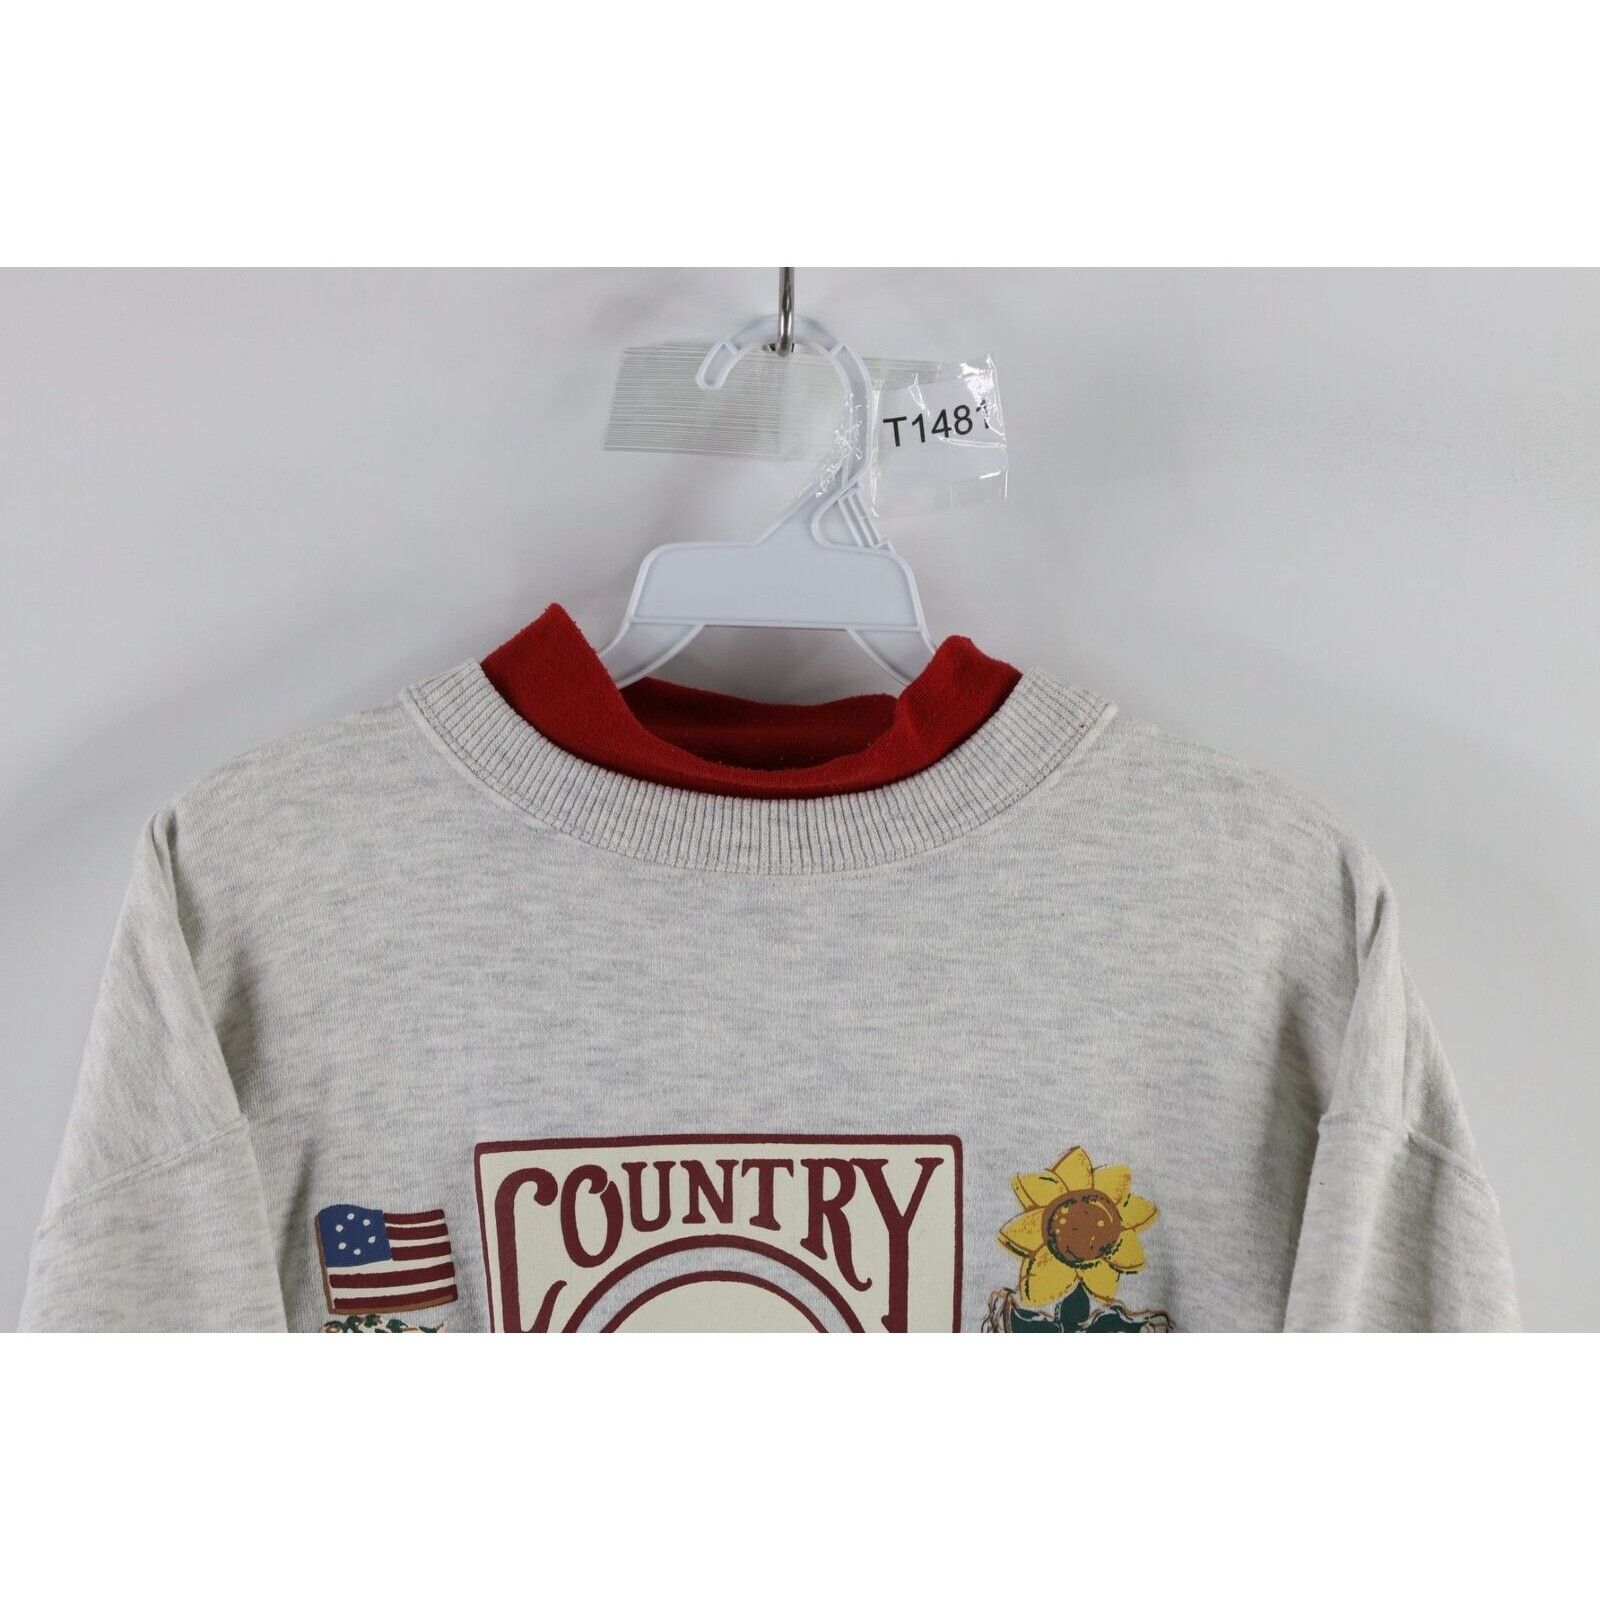 Vintage Vintage 90s Streetwear Country Home Farmhouse Sweatshirt Size L / US 10 / IT 46 - 2 Preview